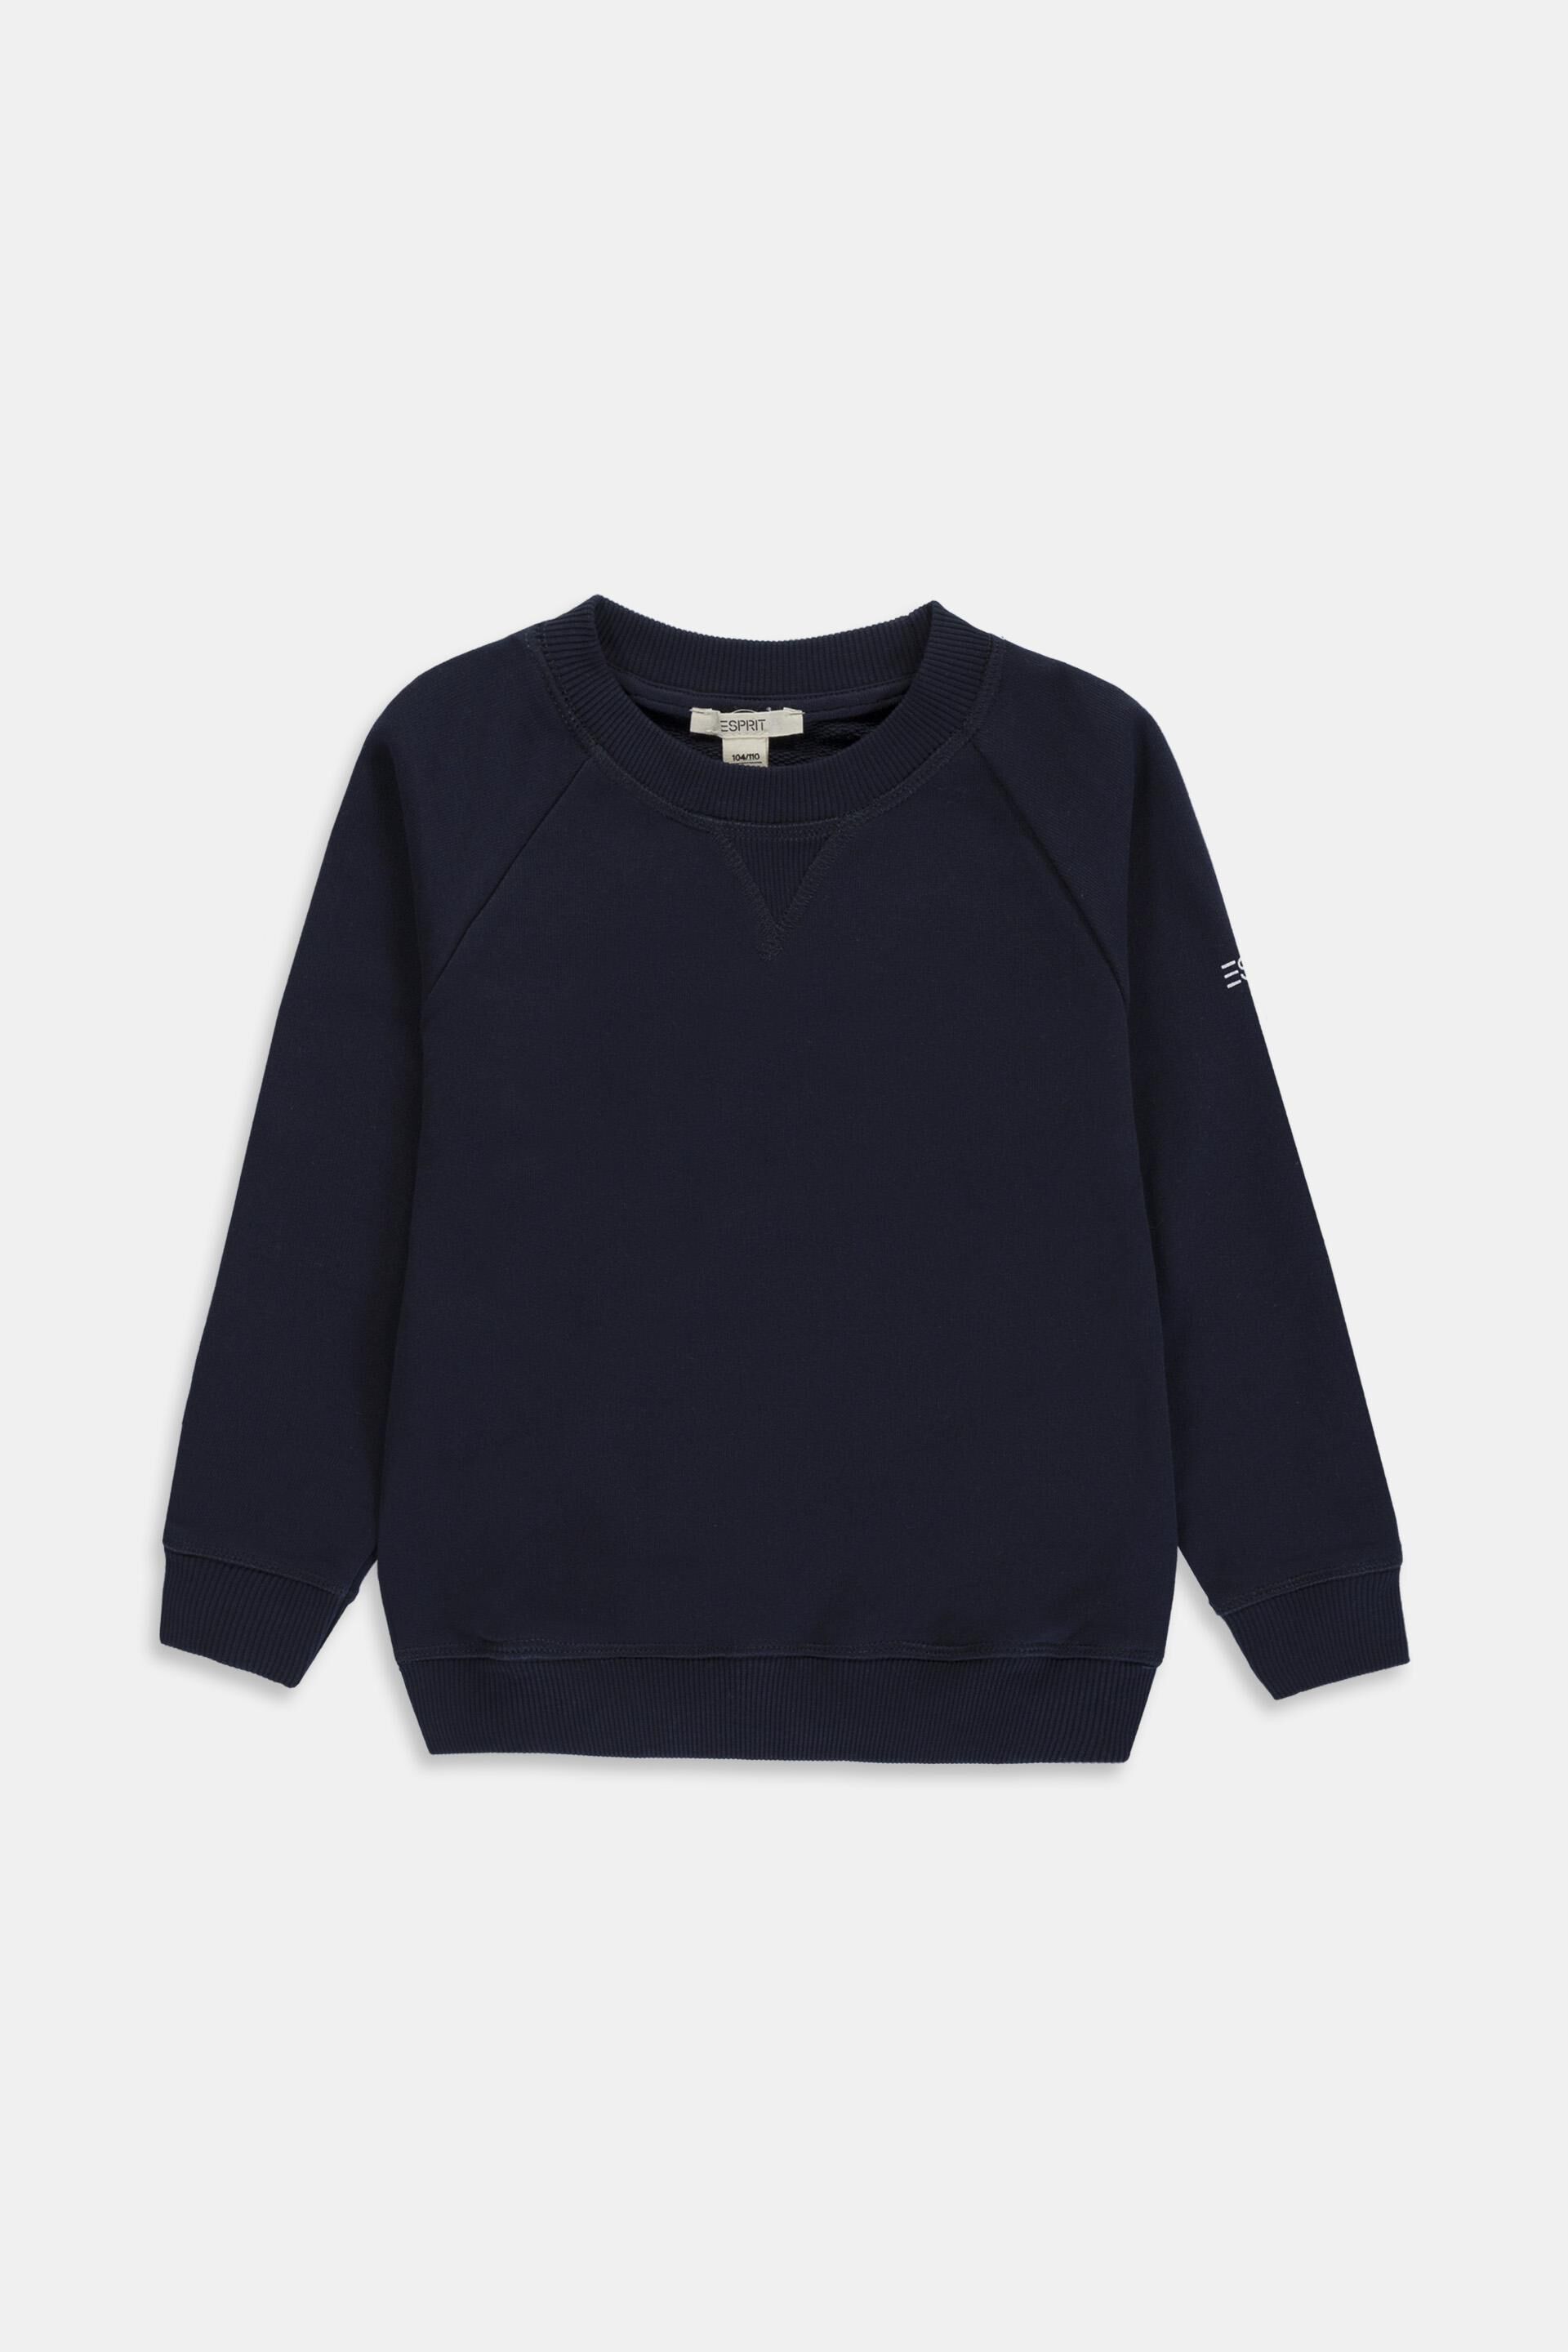 Esprit made with Sweatshirt of 100% cotton logo